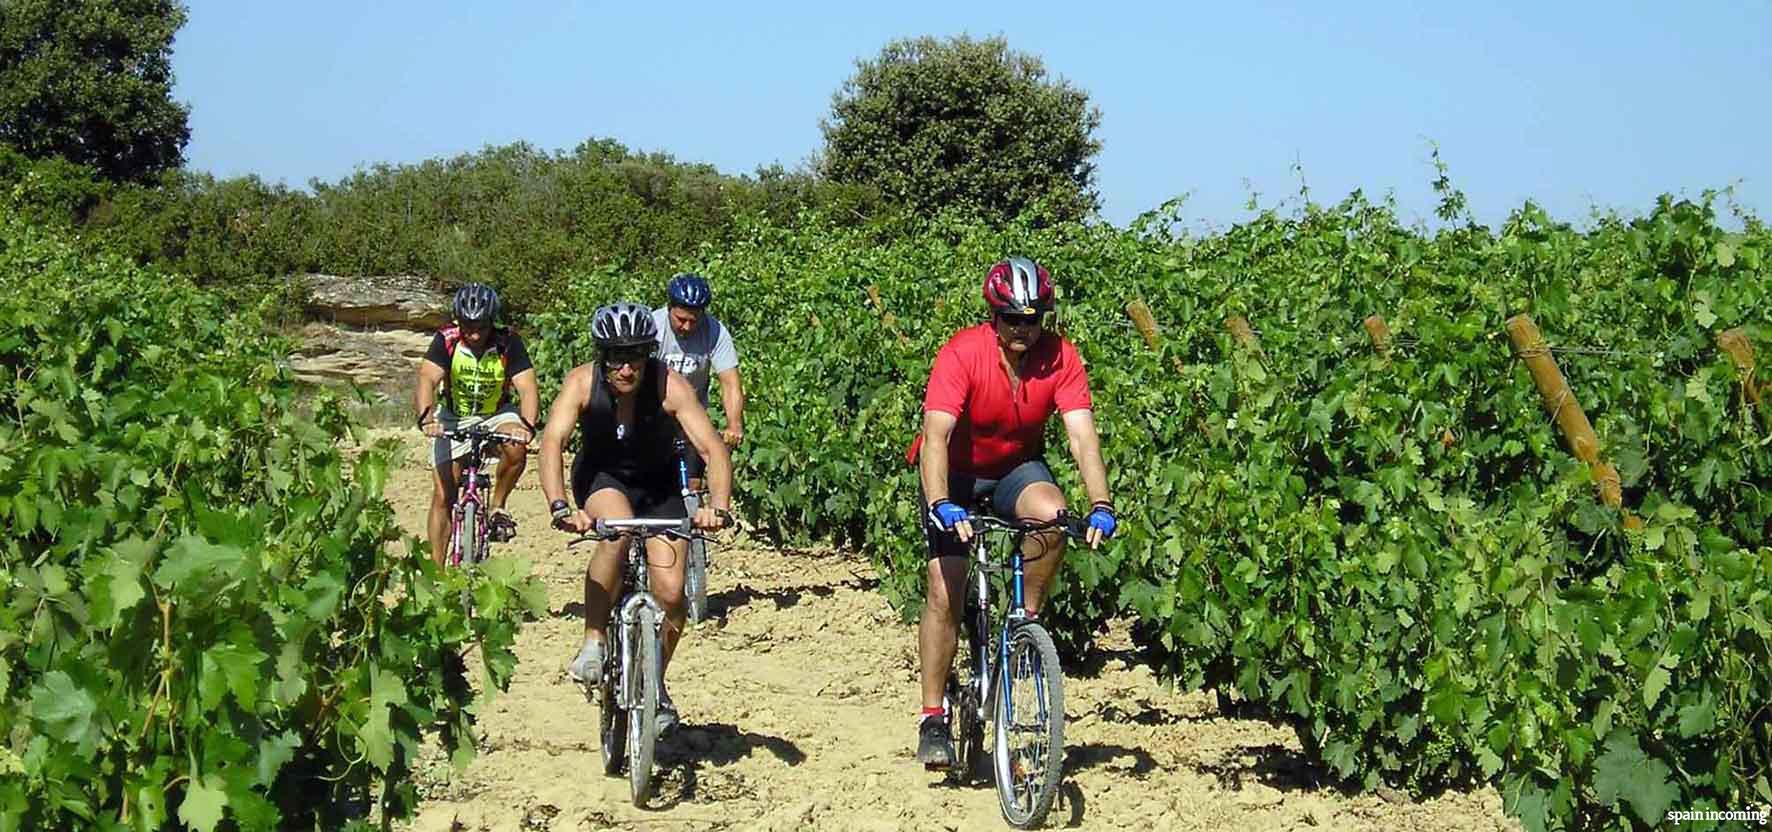 10 ideas for organize your trip to Spain - La Rioja vineyards